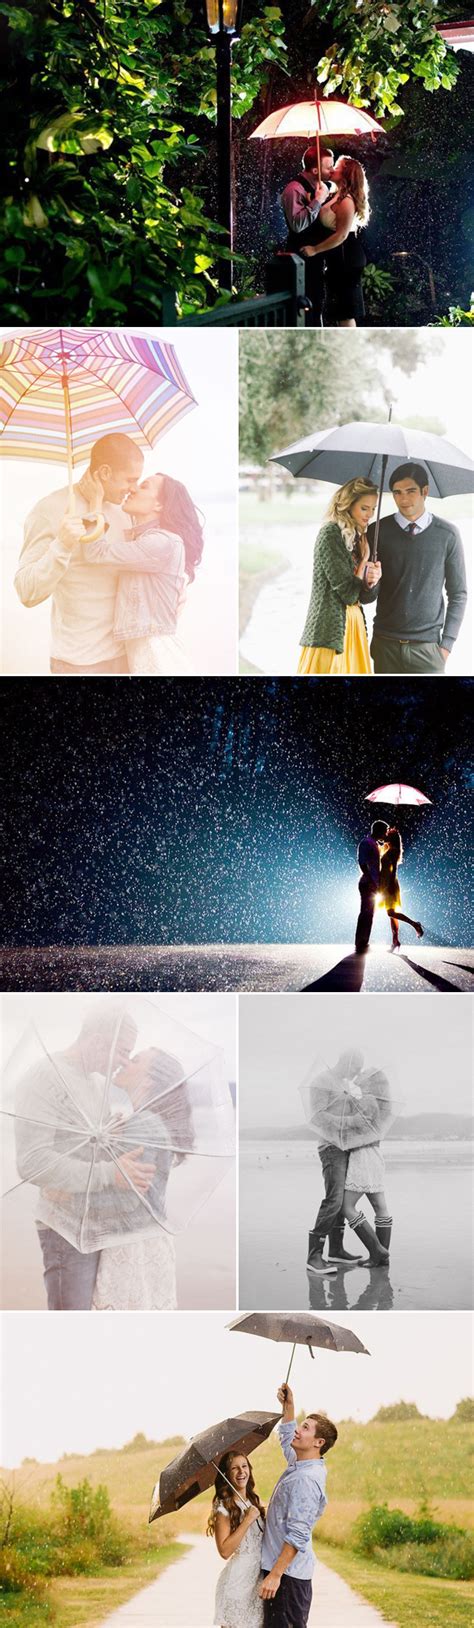 Rain on wedding day photo ideas. 16 Romantic Rainy Day Engagement Photo Ideas - Praise Wedding